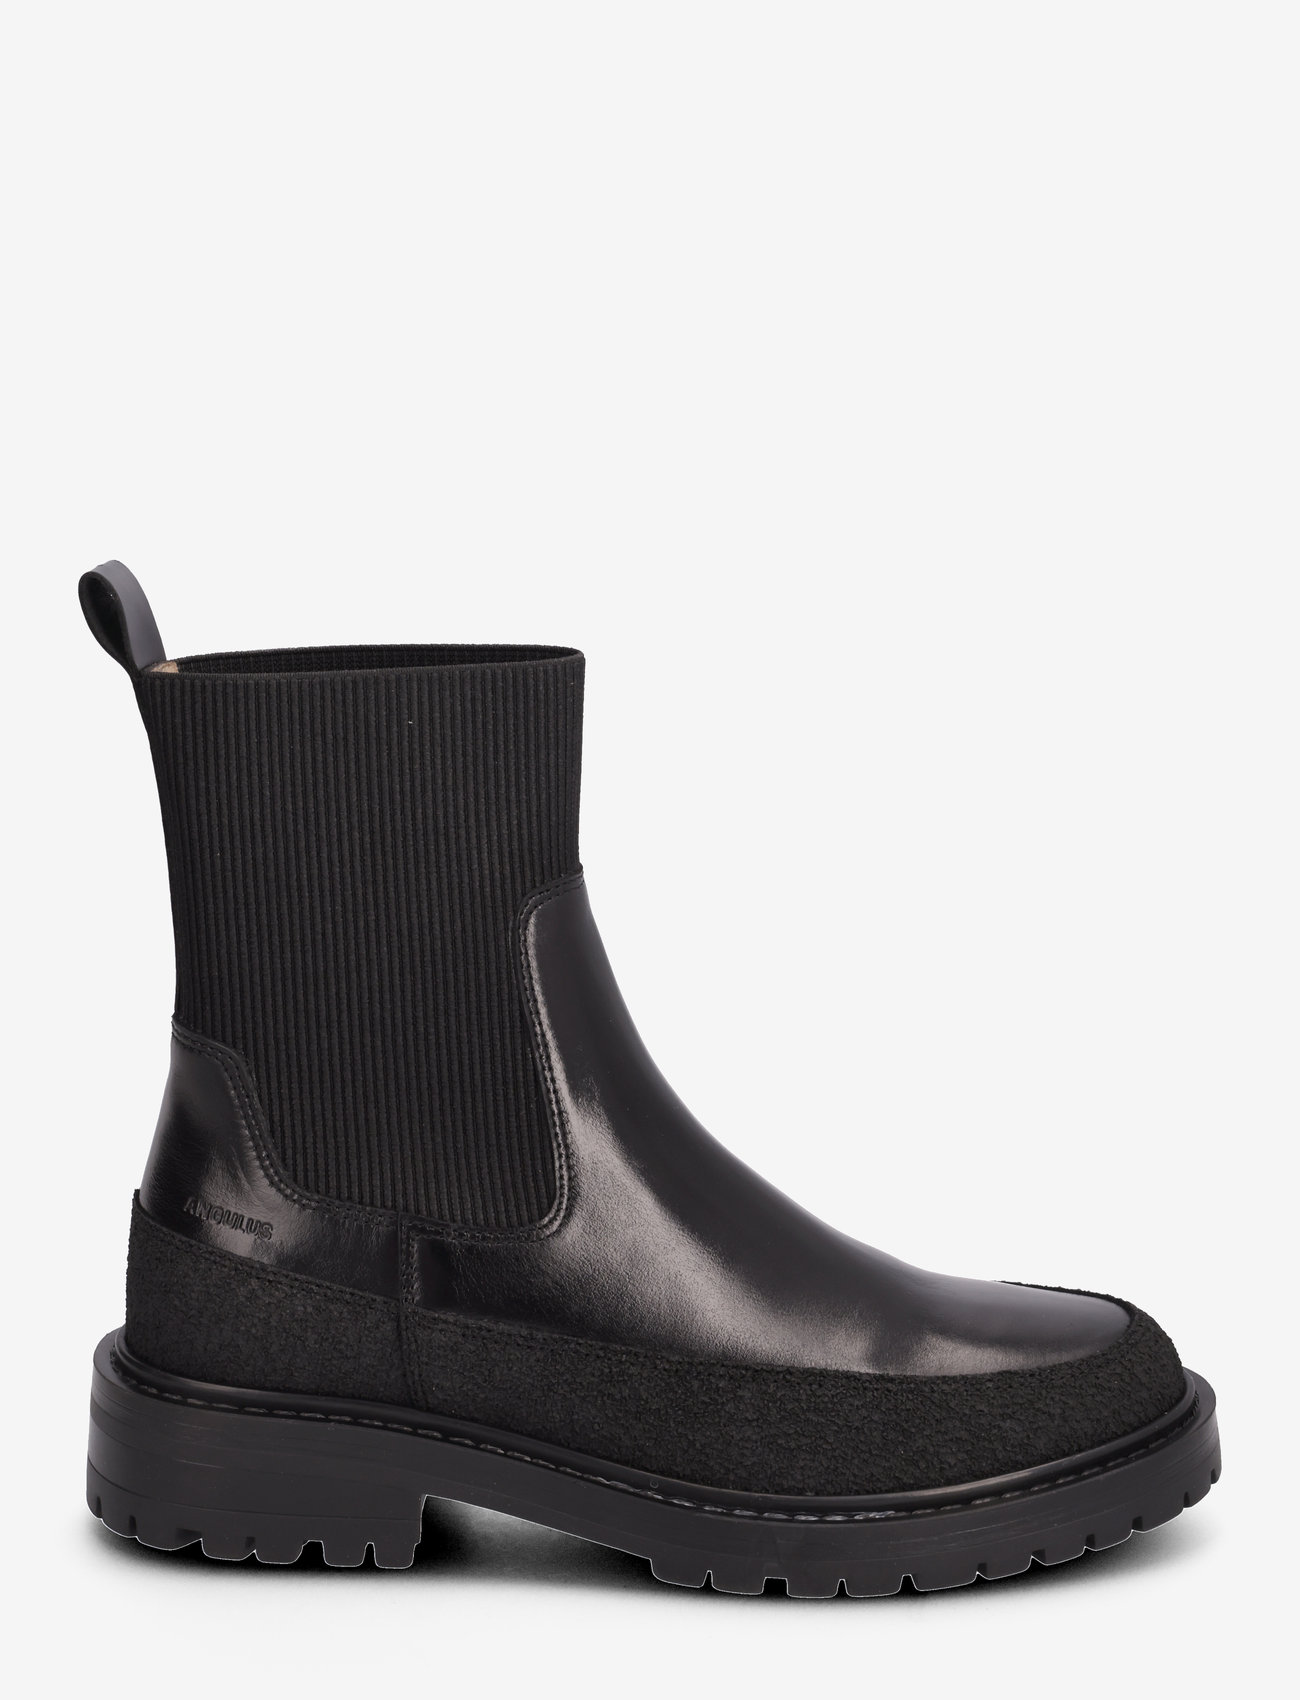 ANGULUS - Boots - flat - chelsea stila zābaki - 1321/1835/019 black - 1